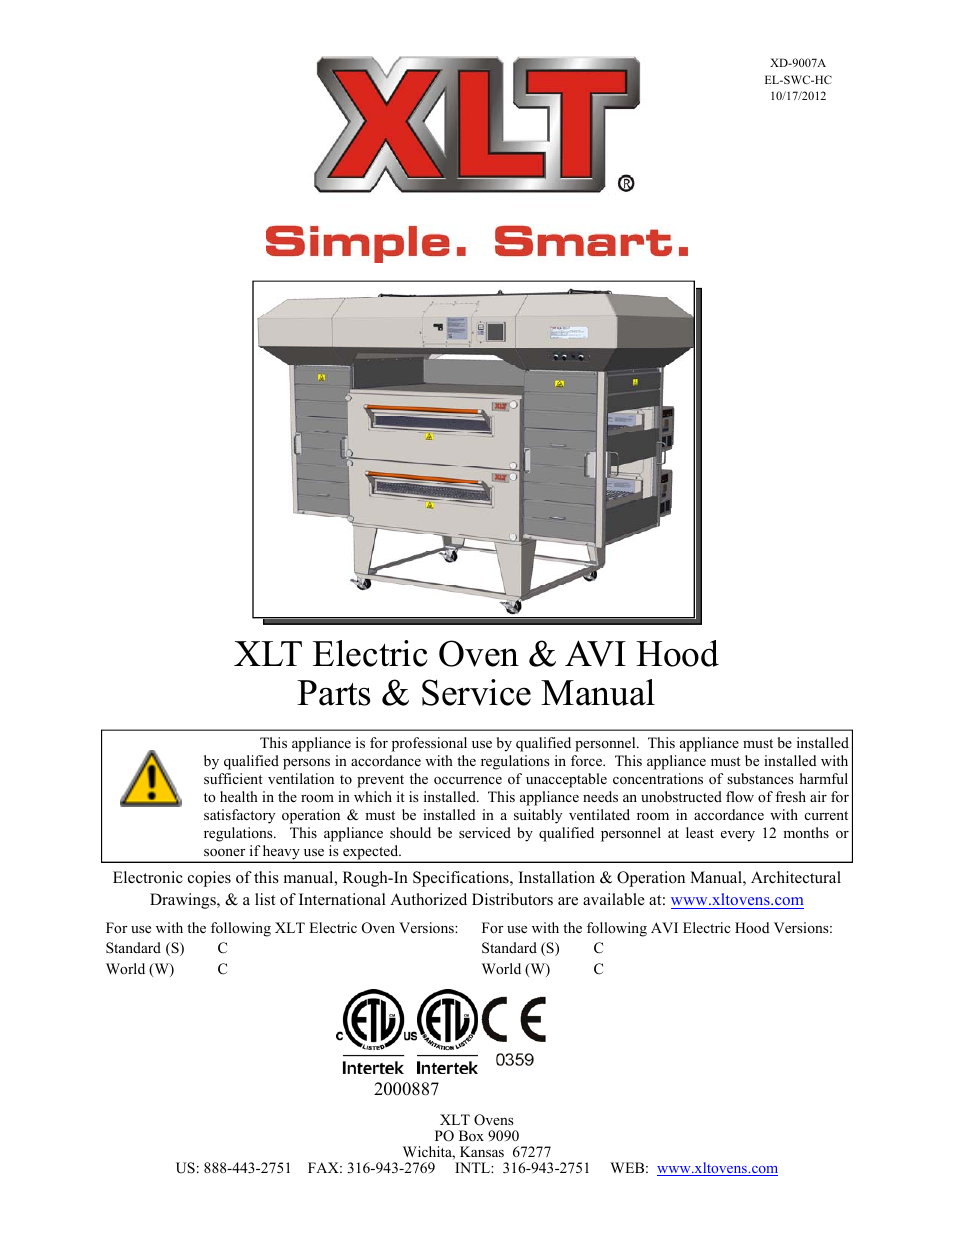 XLT XD-9007A (ELEC Oven Version – C, AVI Hood Version – C) User Manual | 64 pages